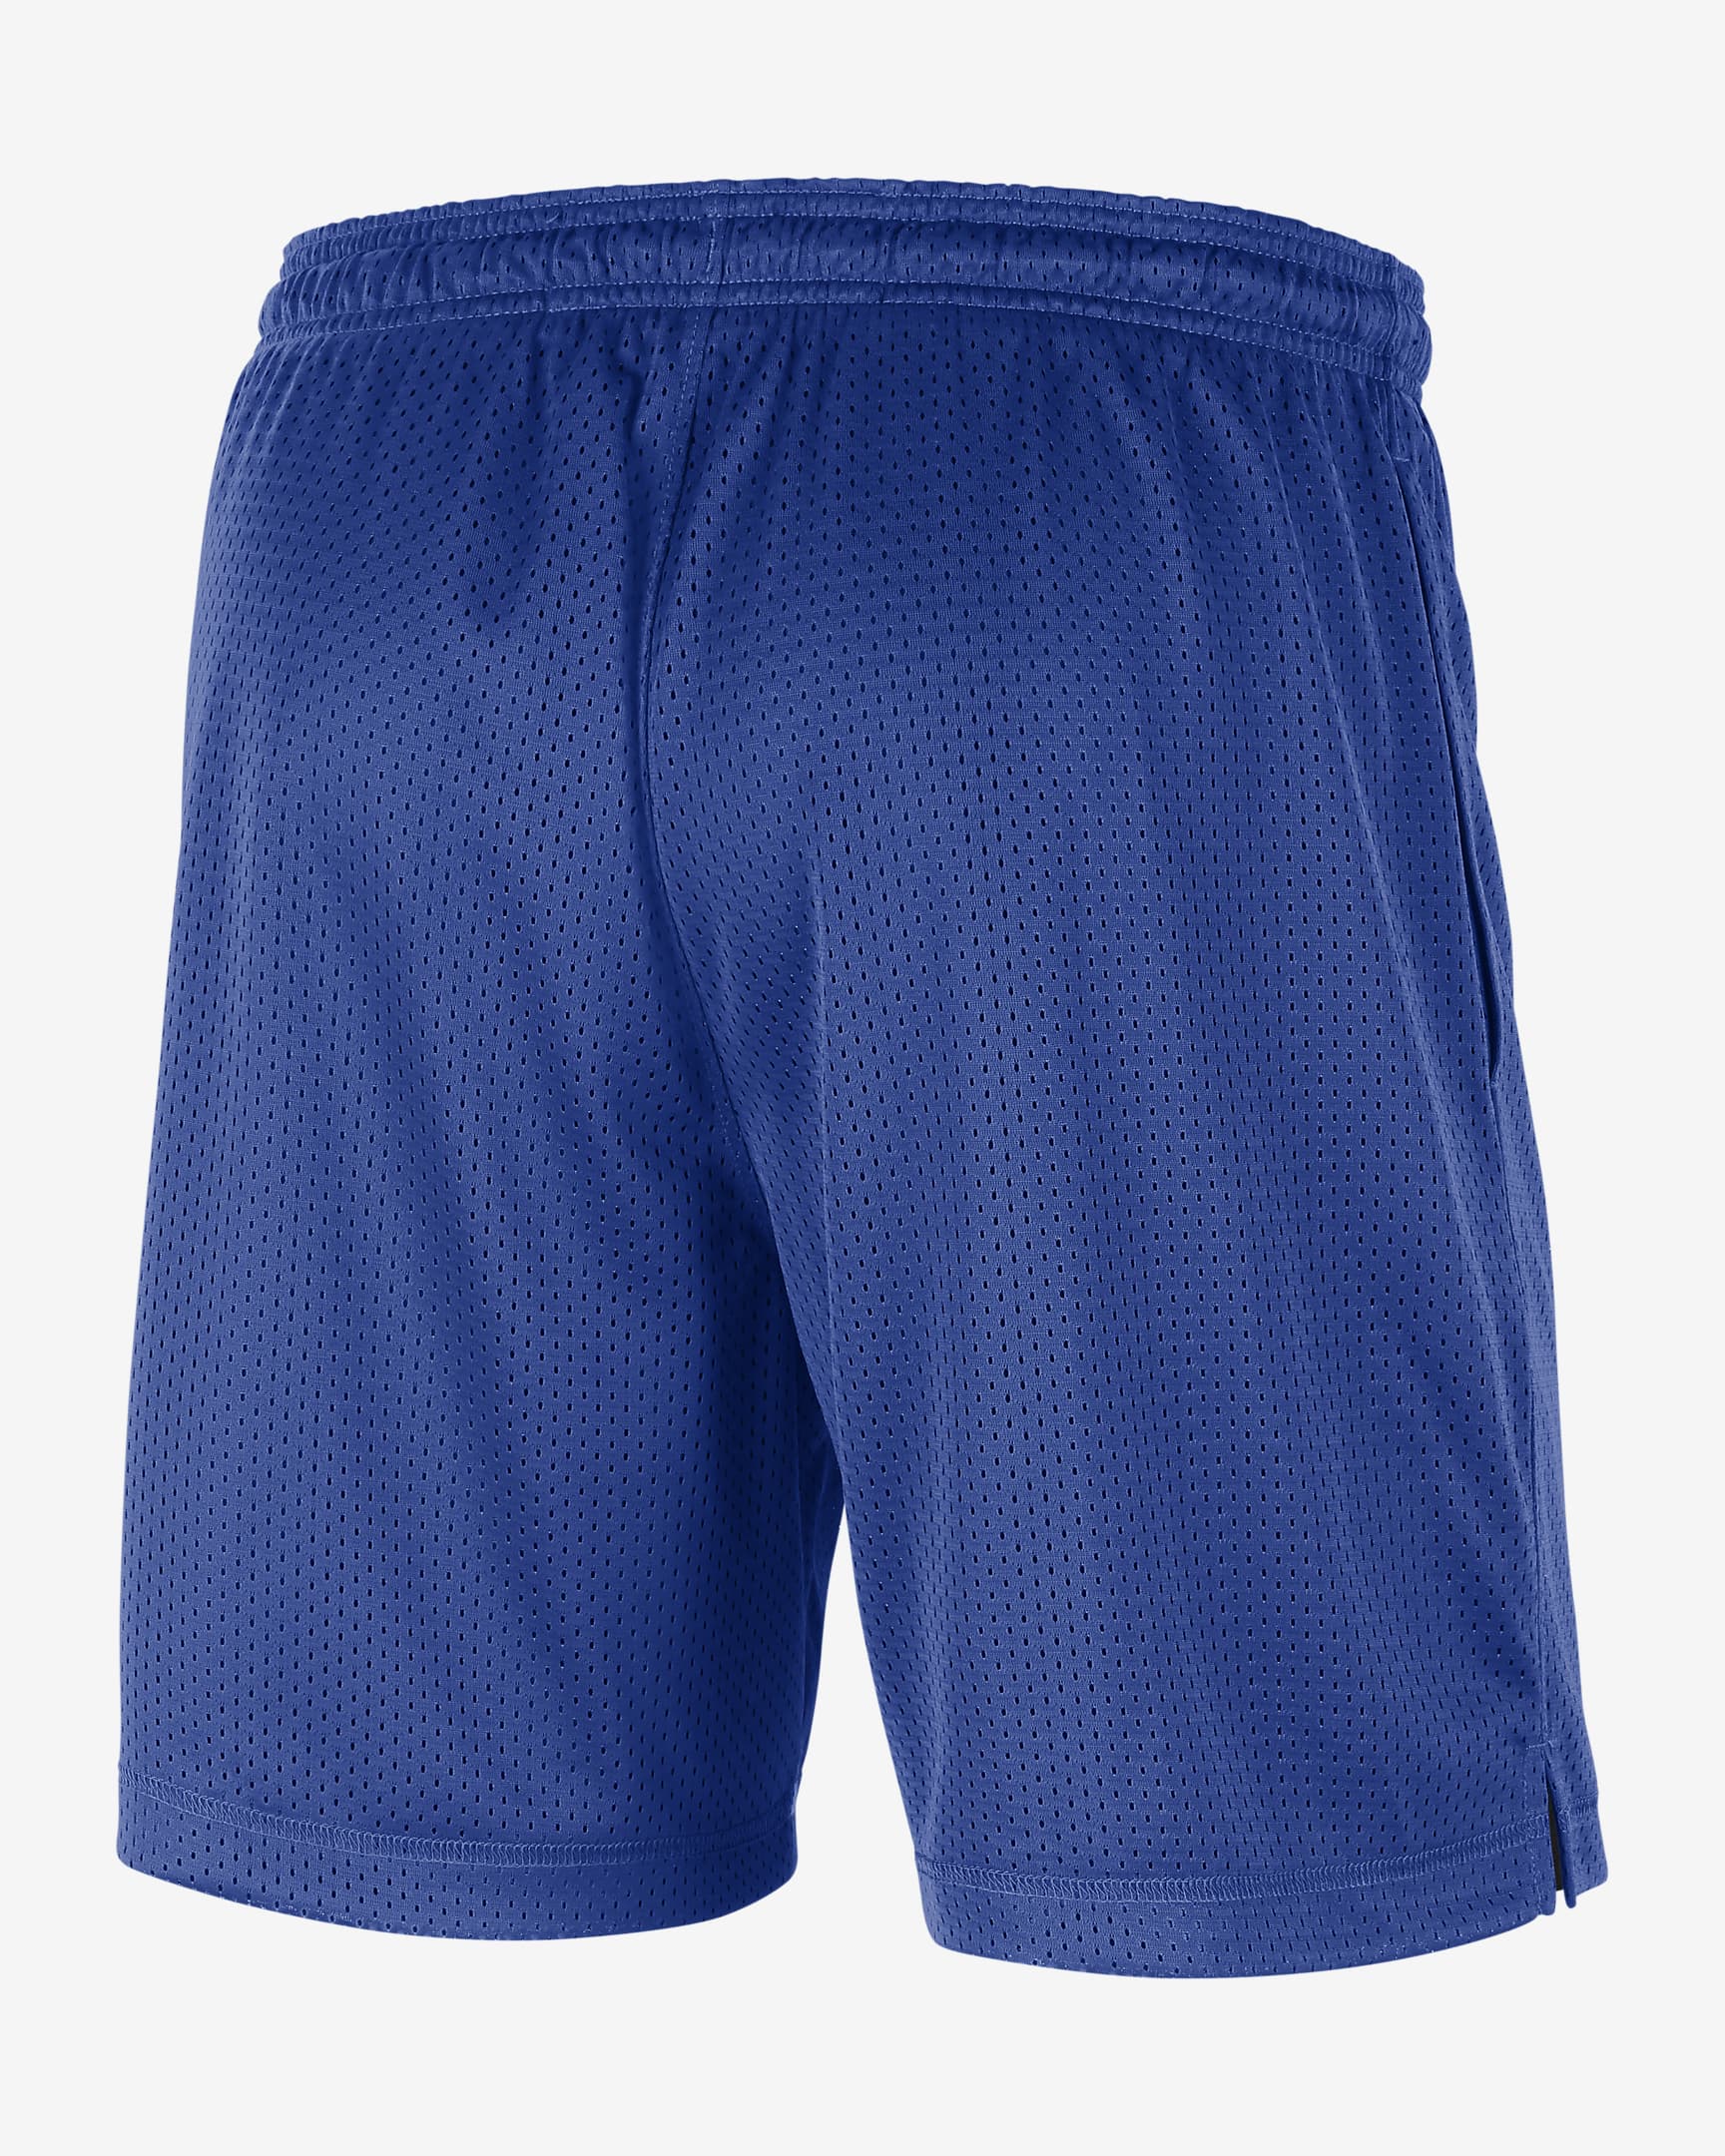 Warriors Standard Issue Men's Nike NBA Reversible Shorts. Nike.com